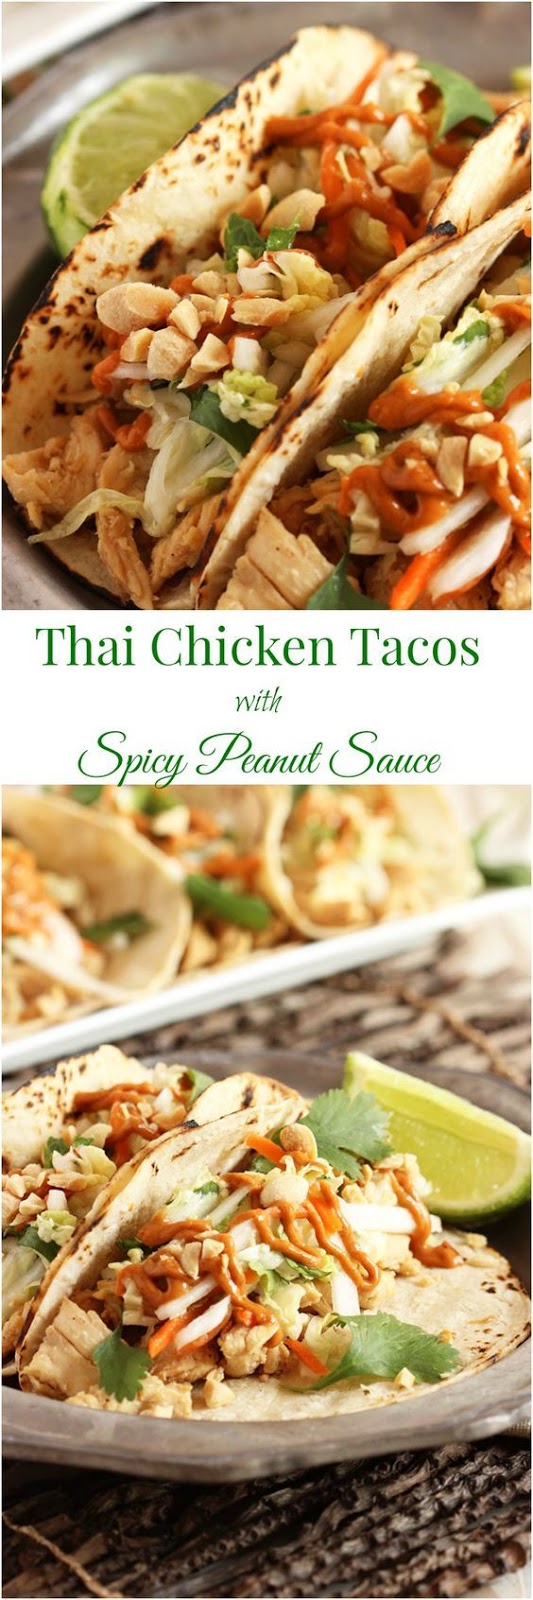 Thai Chicken Tacos with Spicy Peanut Sauce